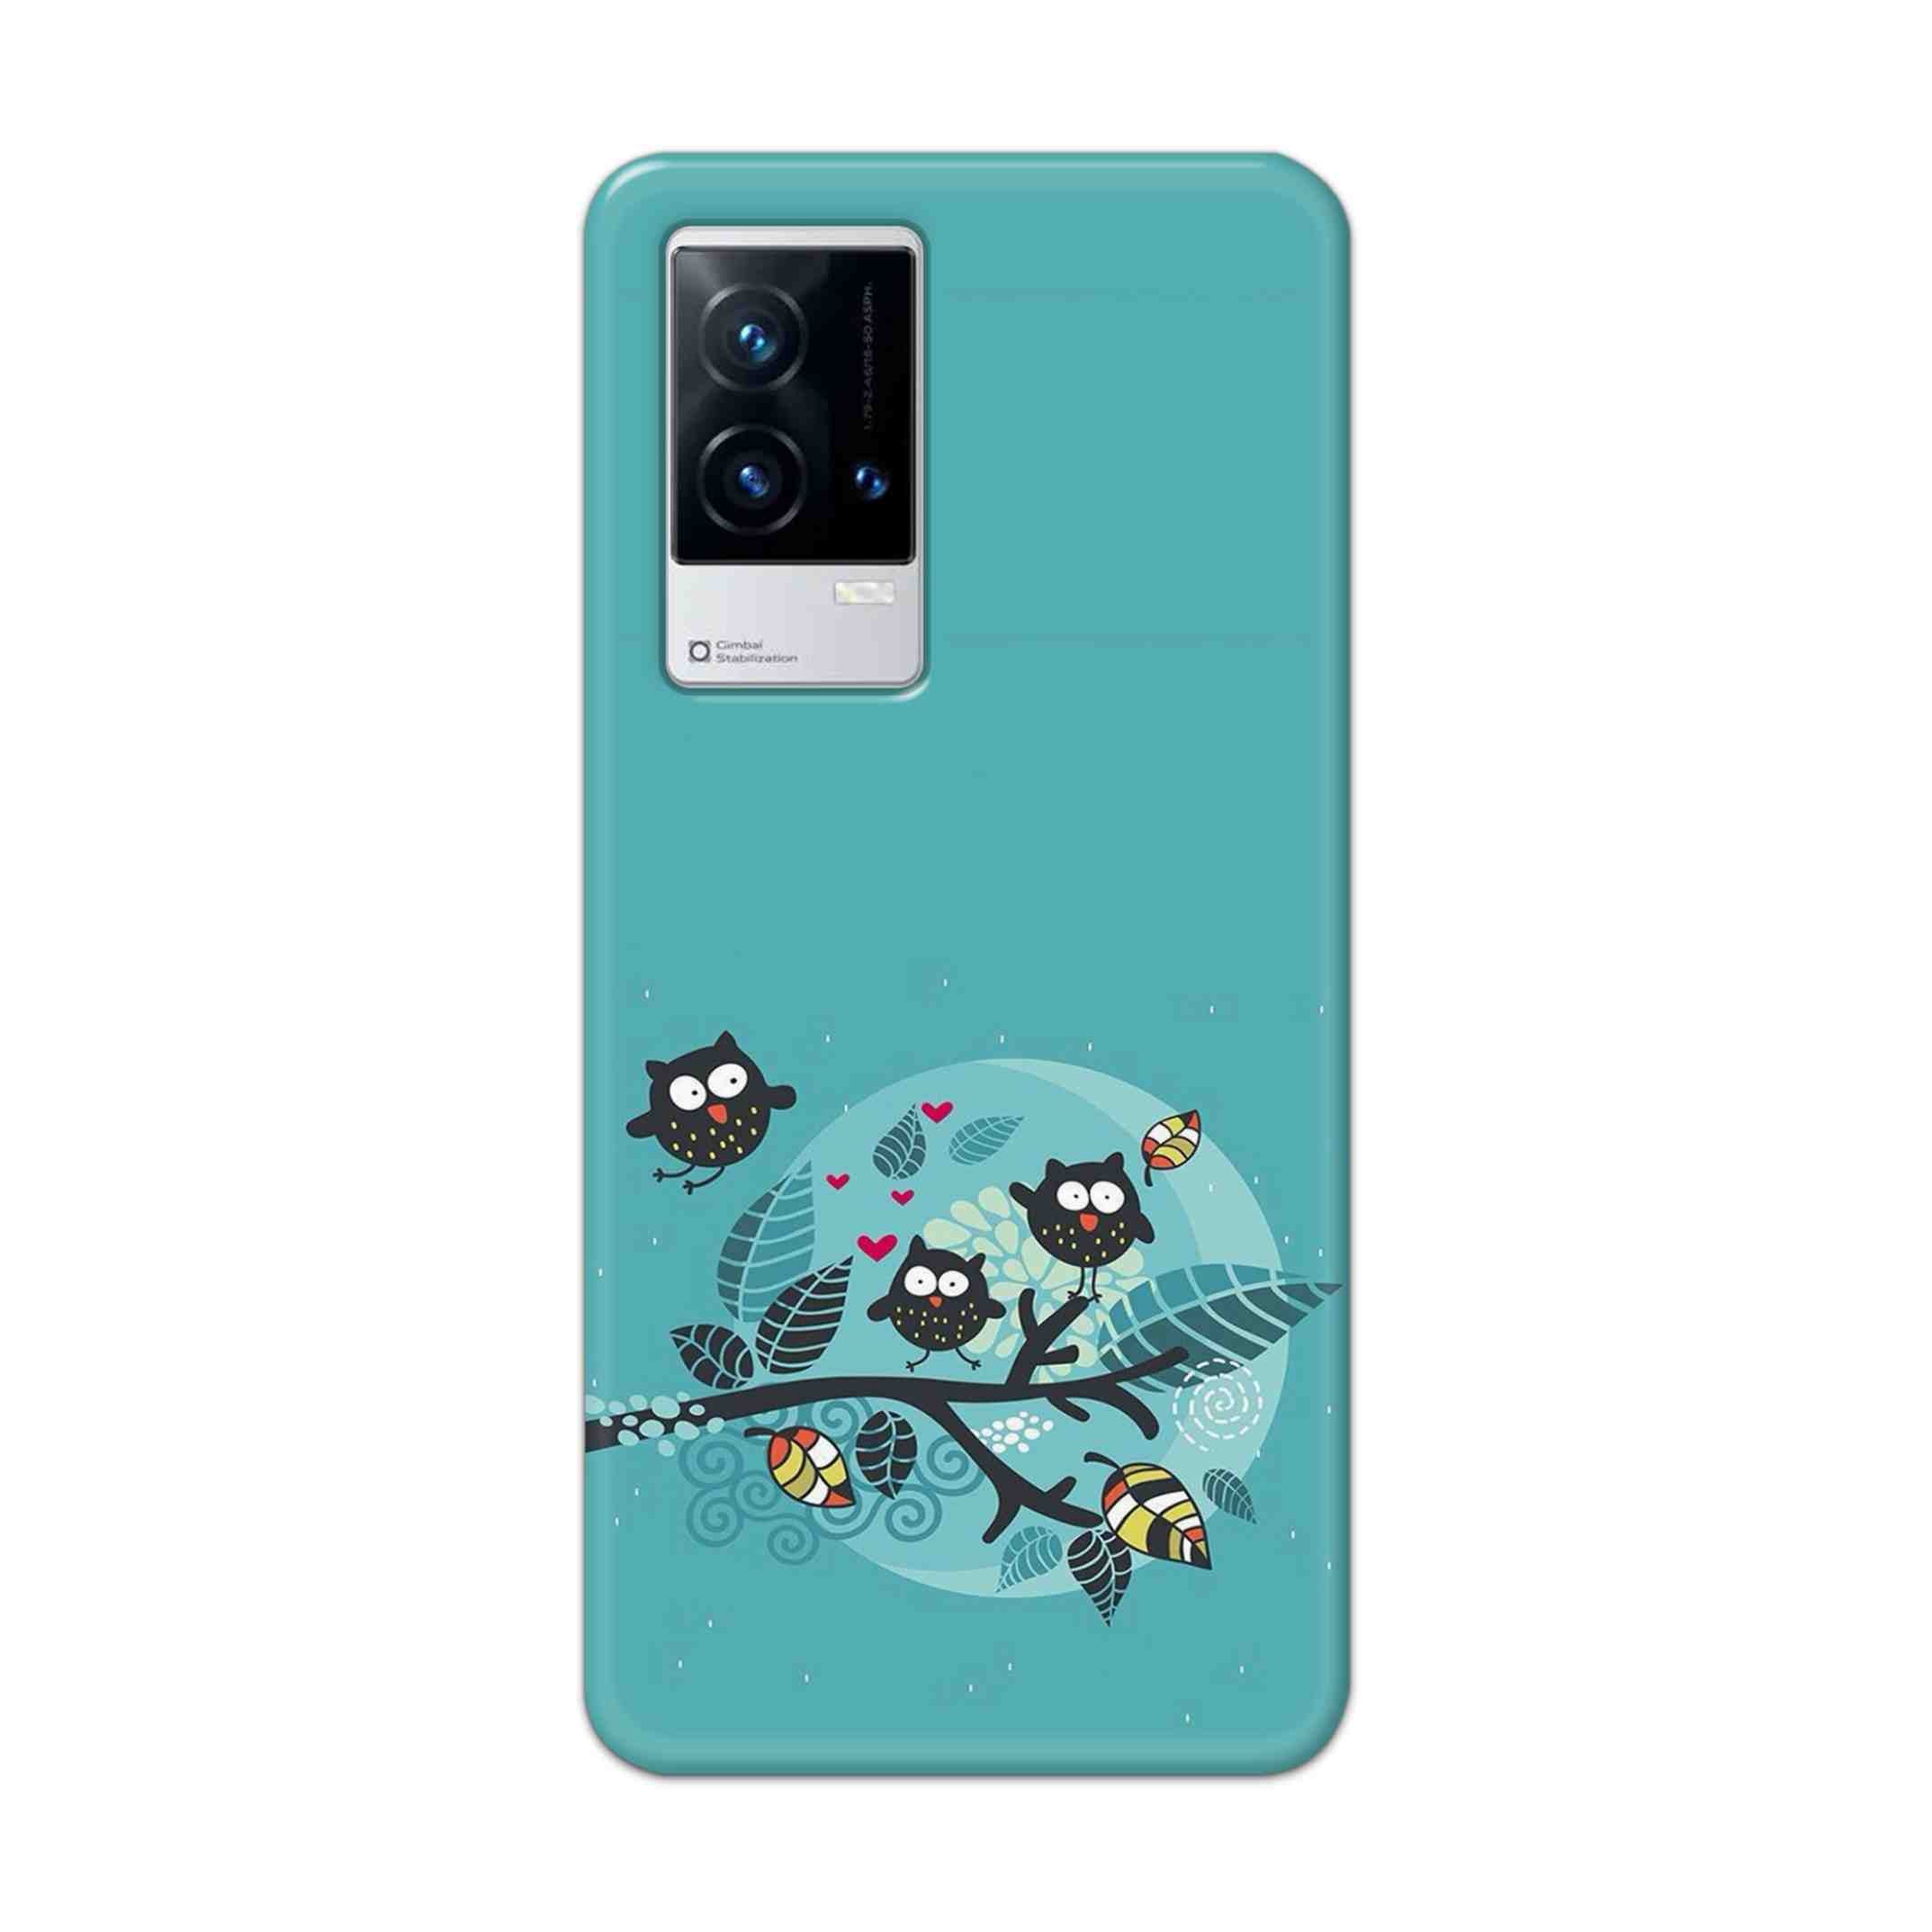 Buy Owl Hard Back Mobile Phone Case Cover For Vivo iQOO 9 5G Online